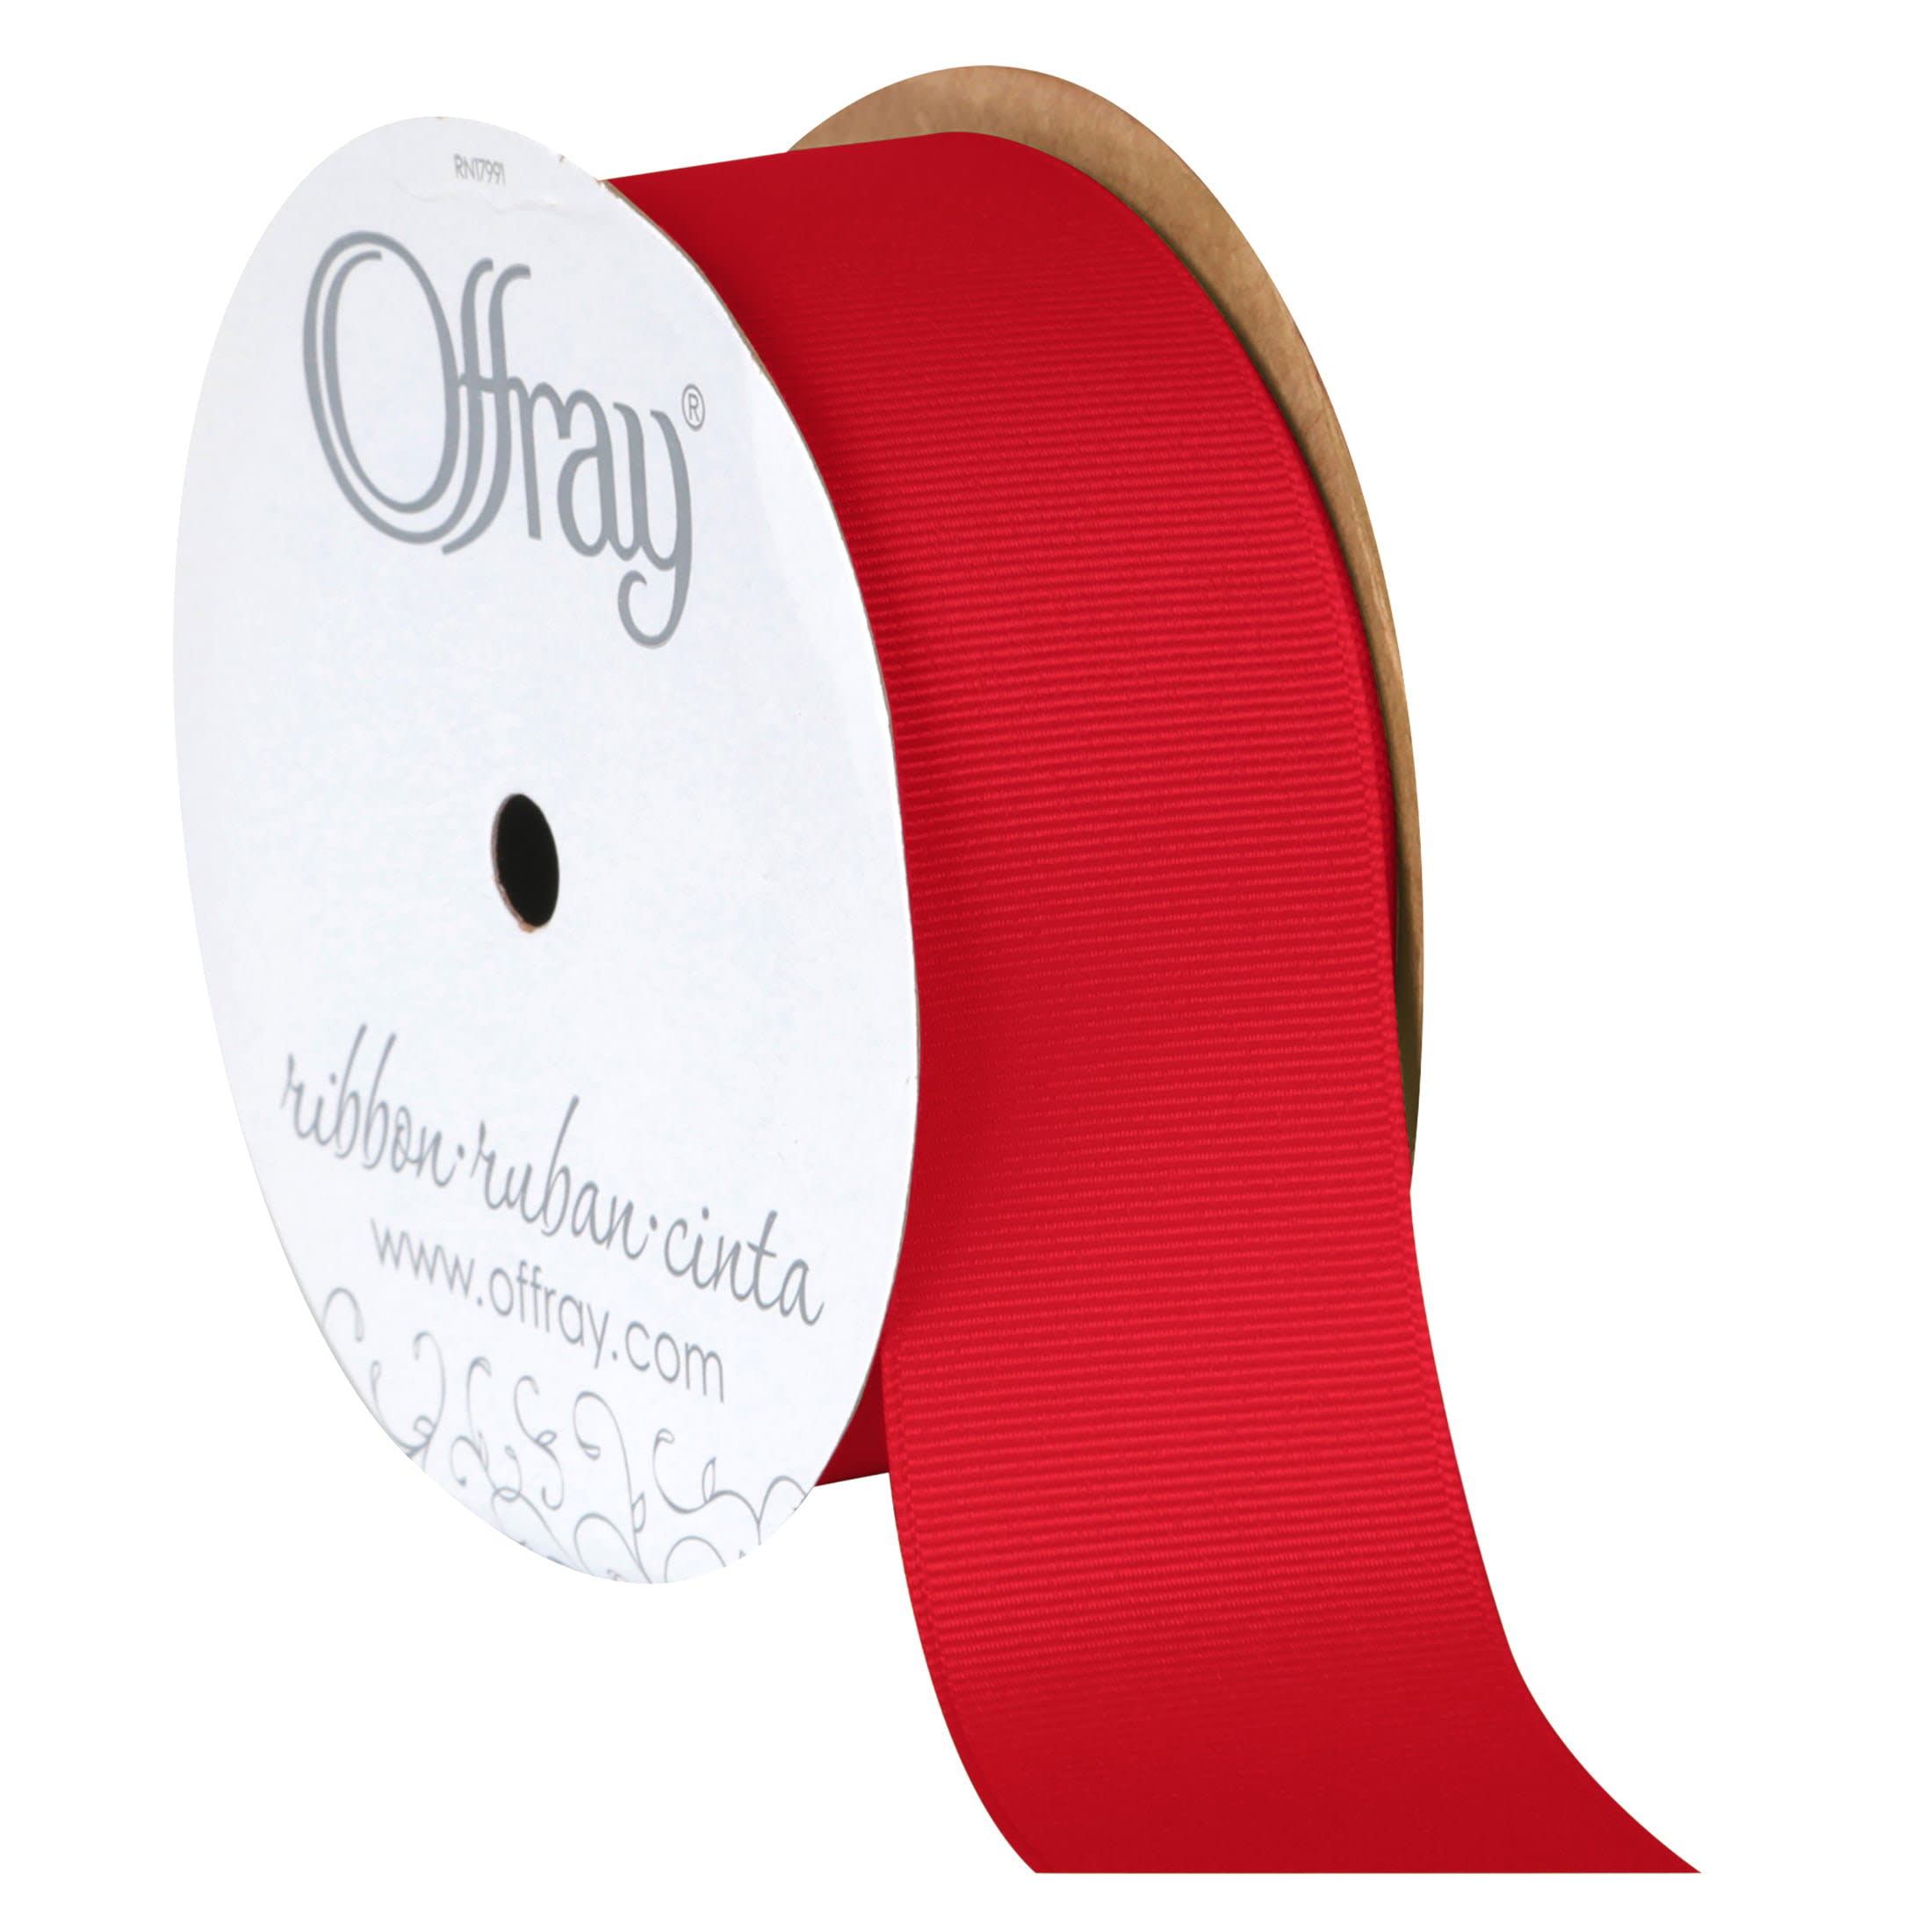 Offray Ribbon, Red 1 1/2 inch Grosgrain Polyester Ribbon, 12 feet